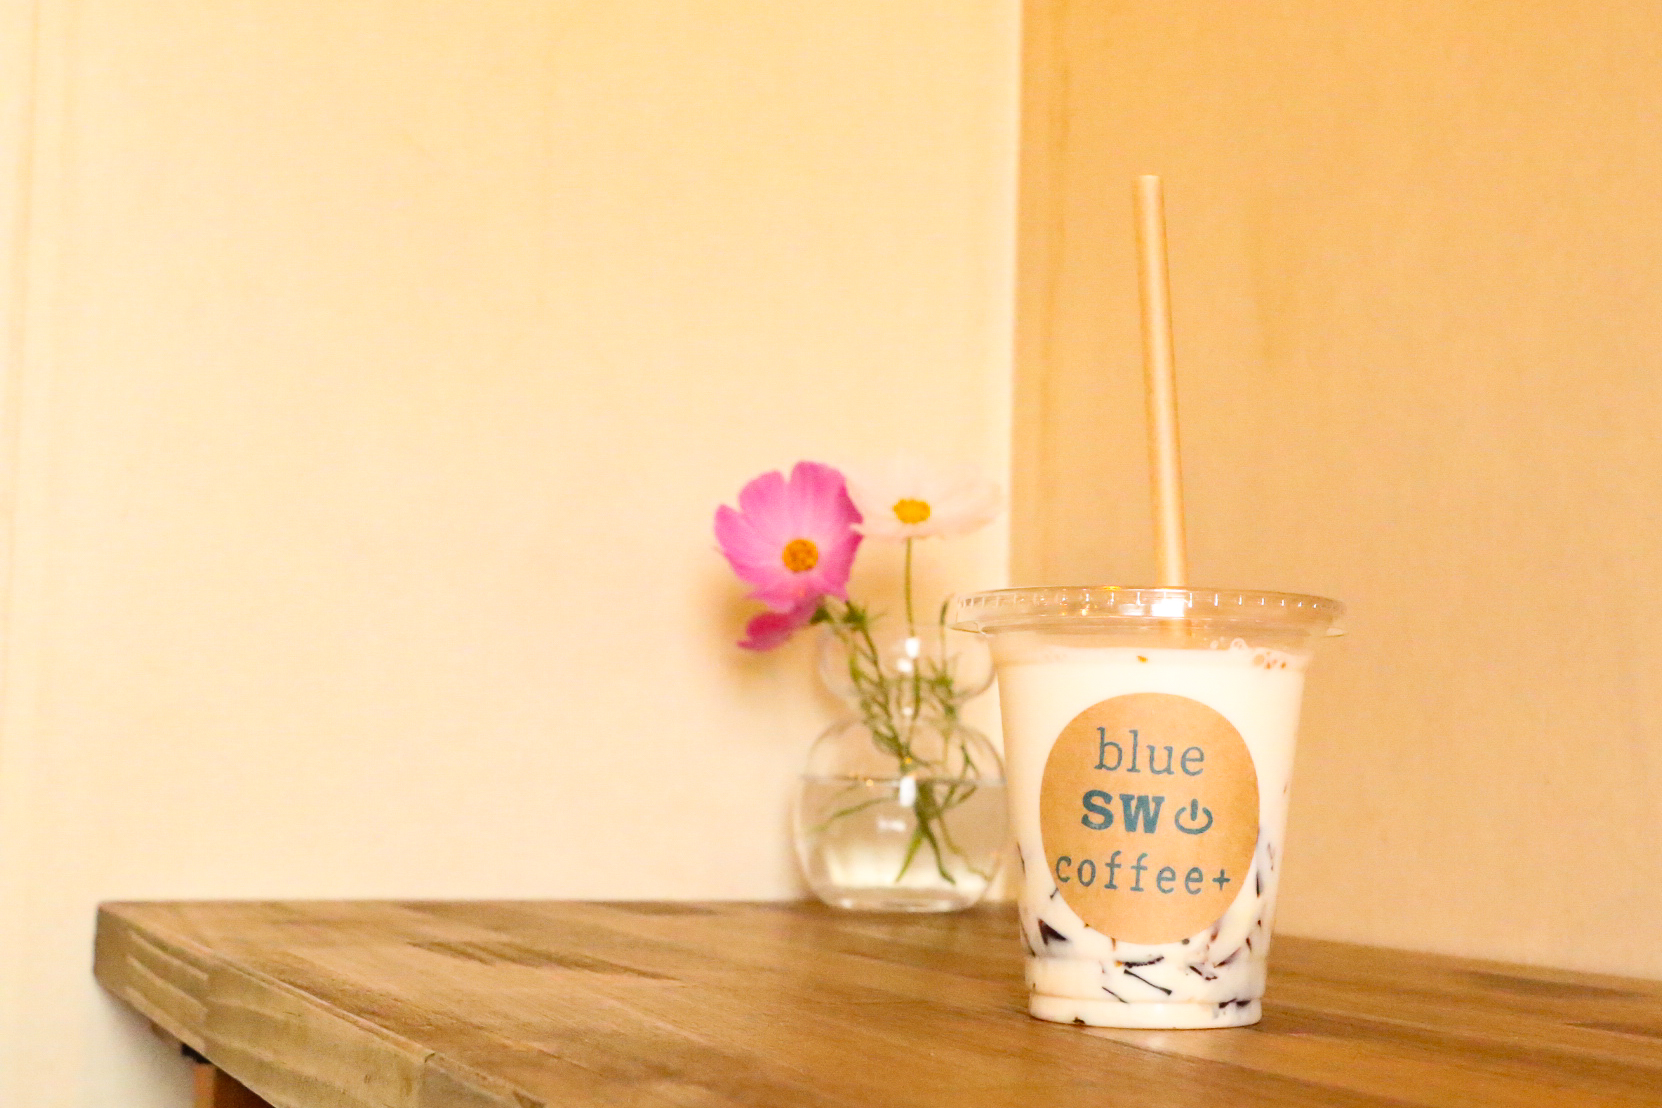 blue SW coffee+